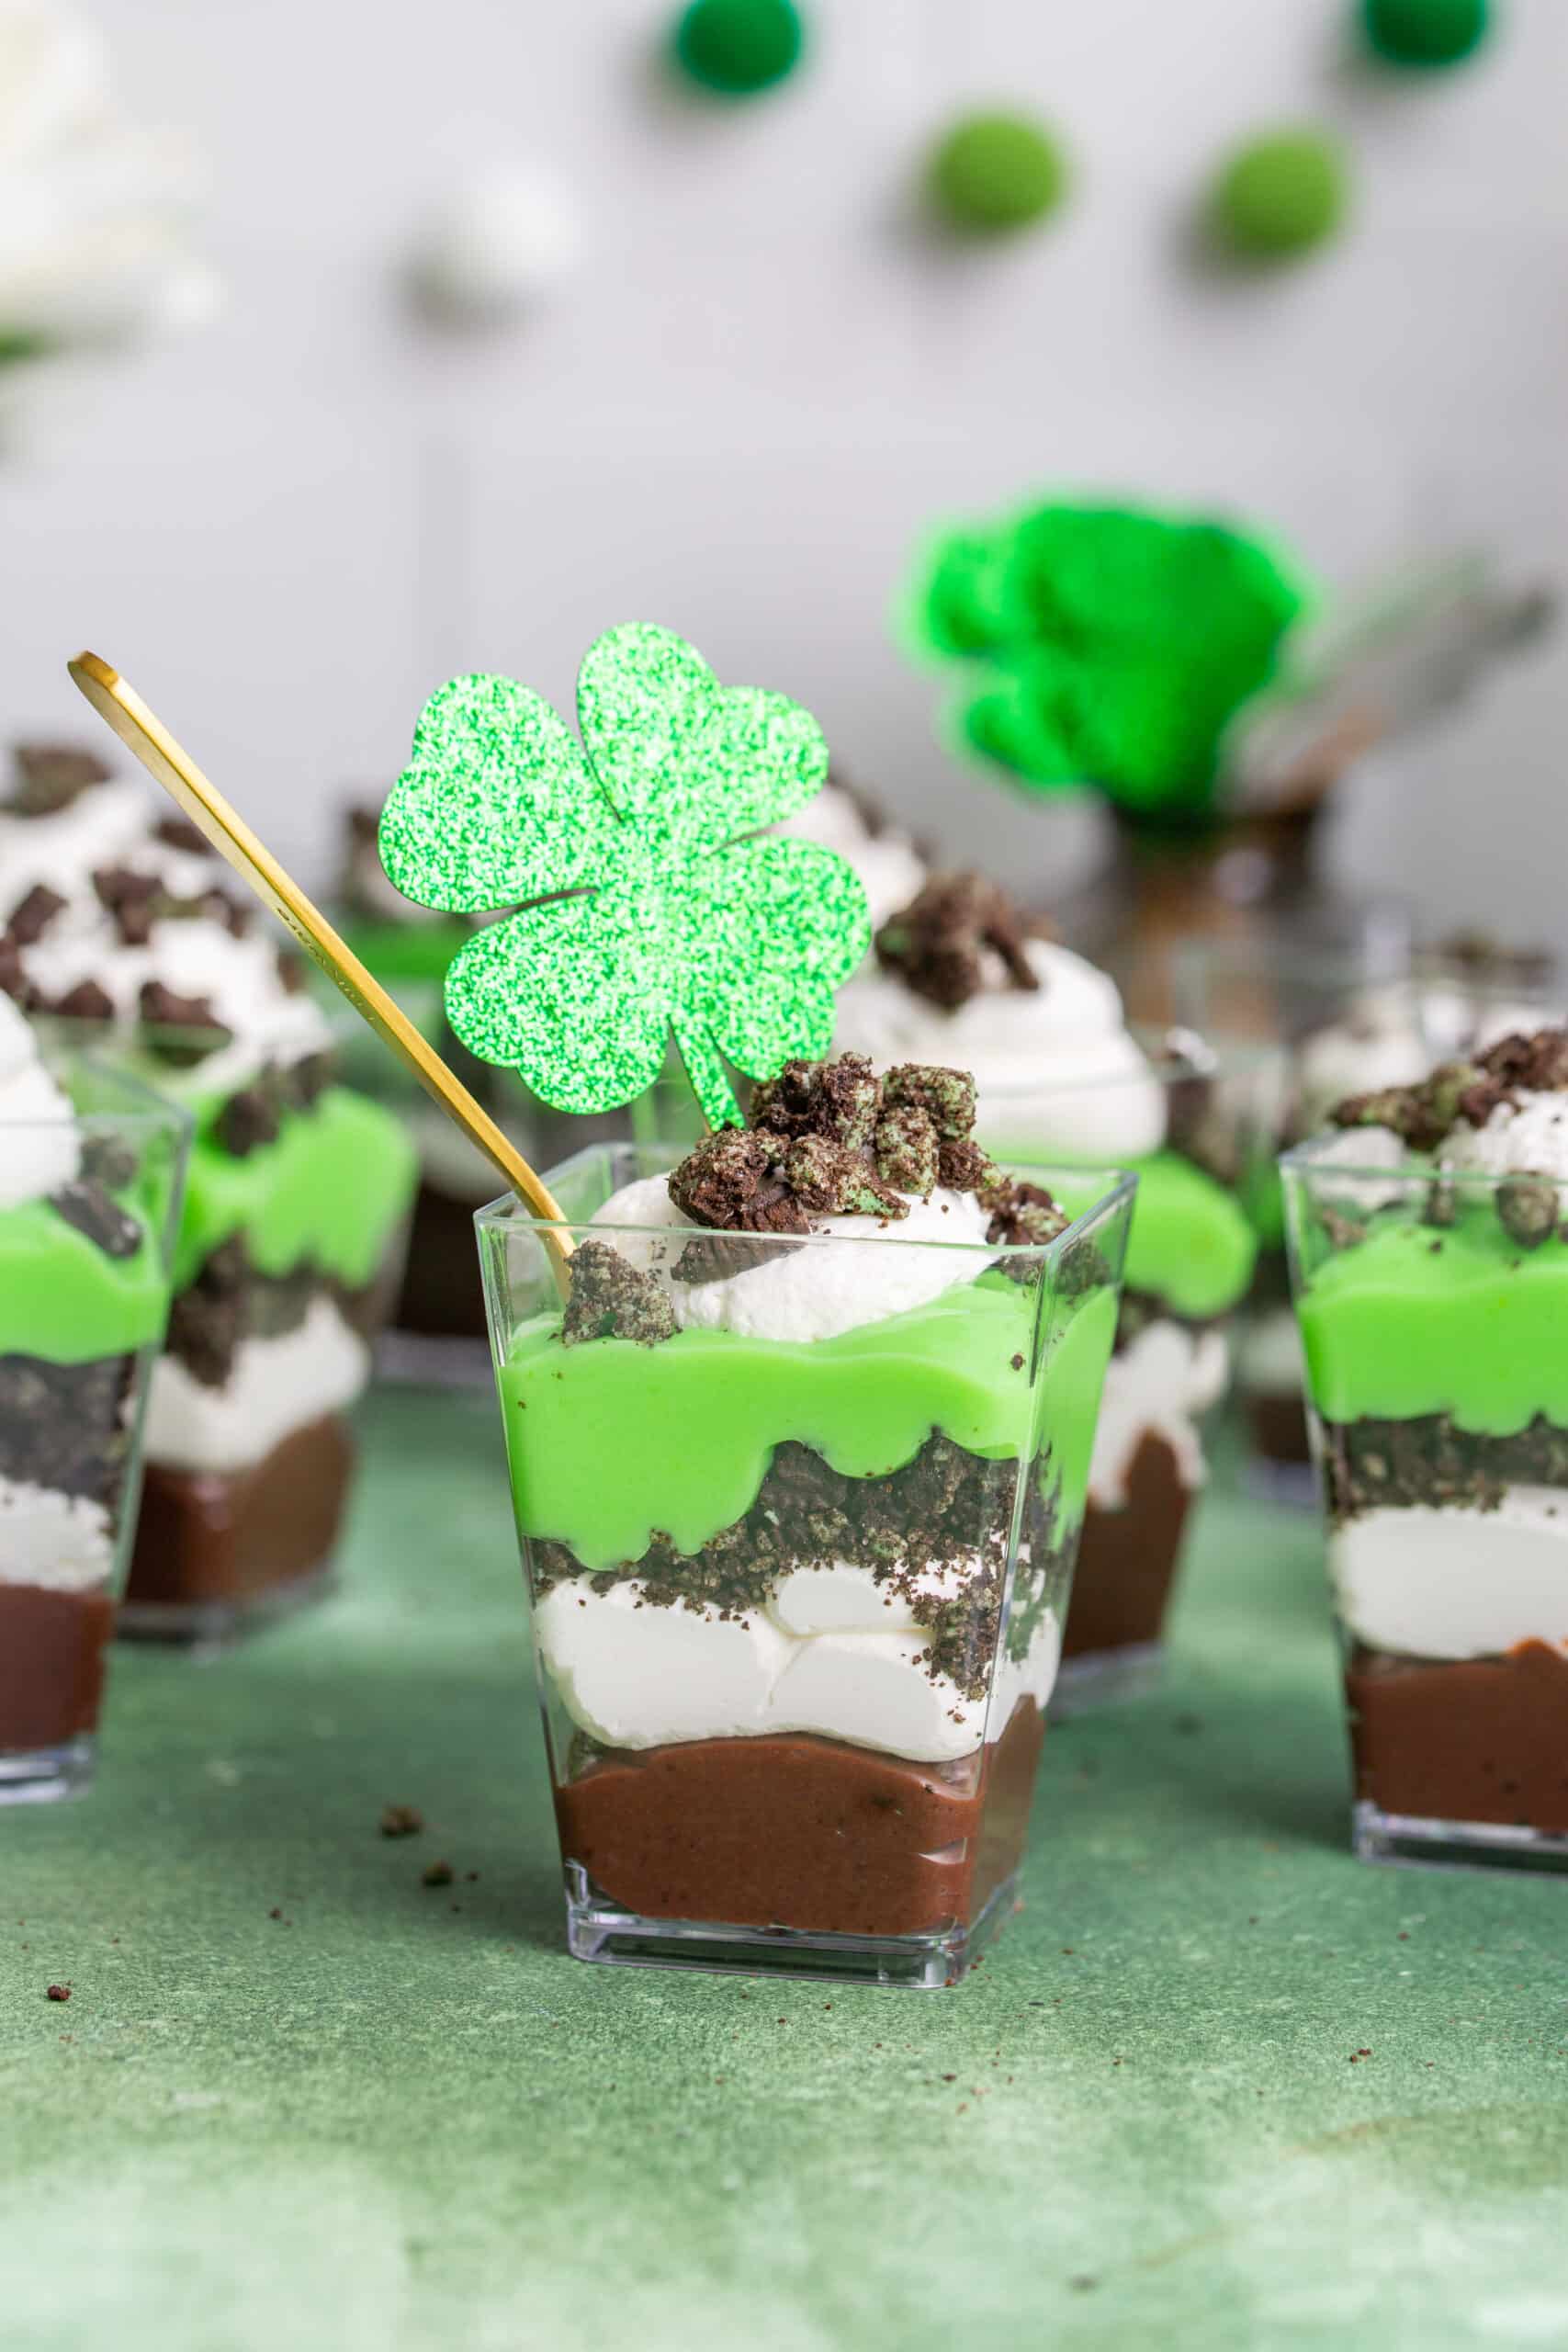 Spiked Mint Chocolate Pudding Parfaits (St. Patrick's Day pudding shots)